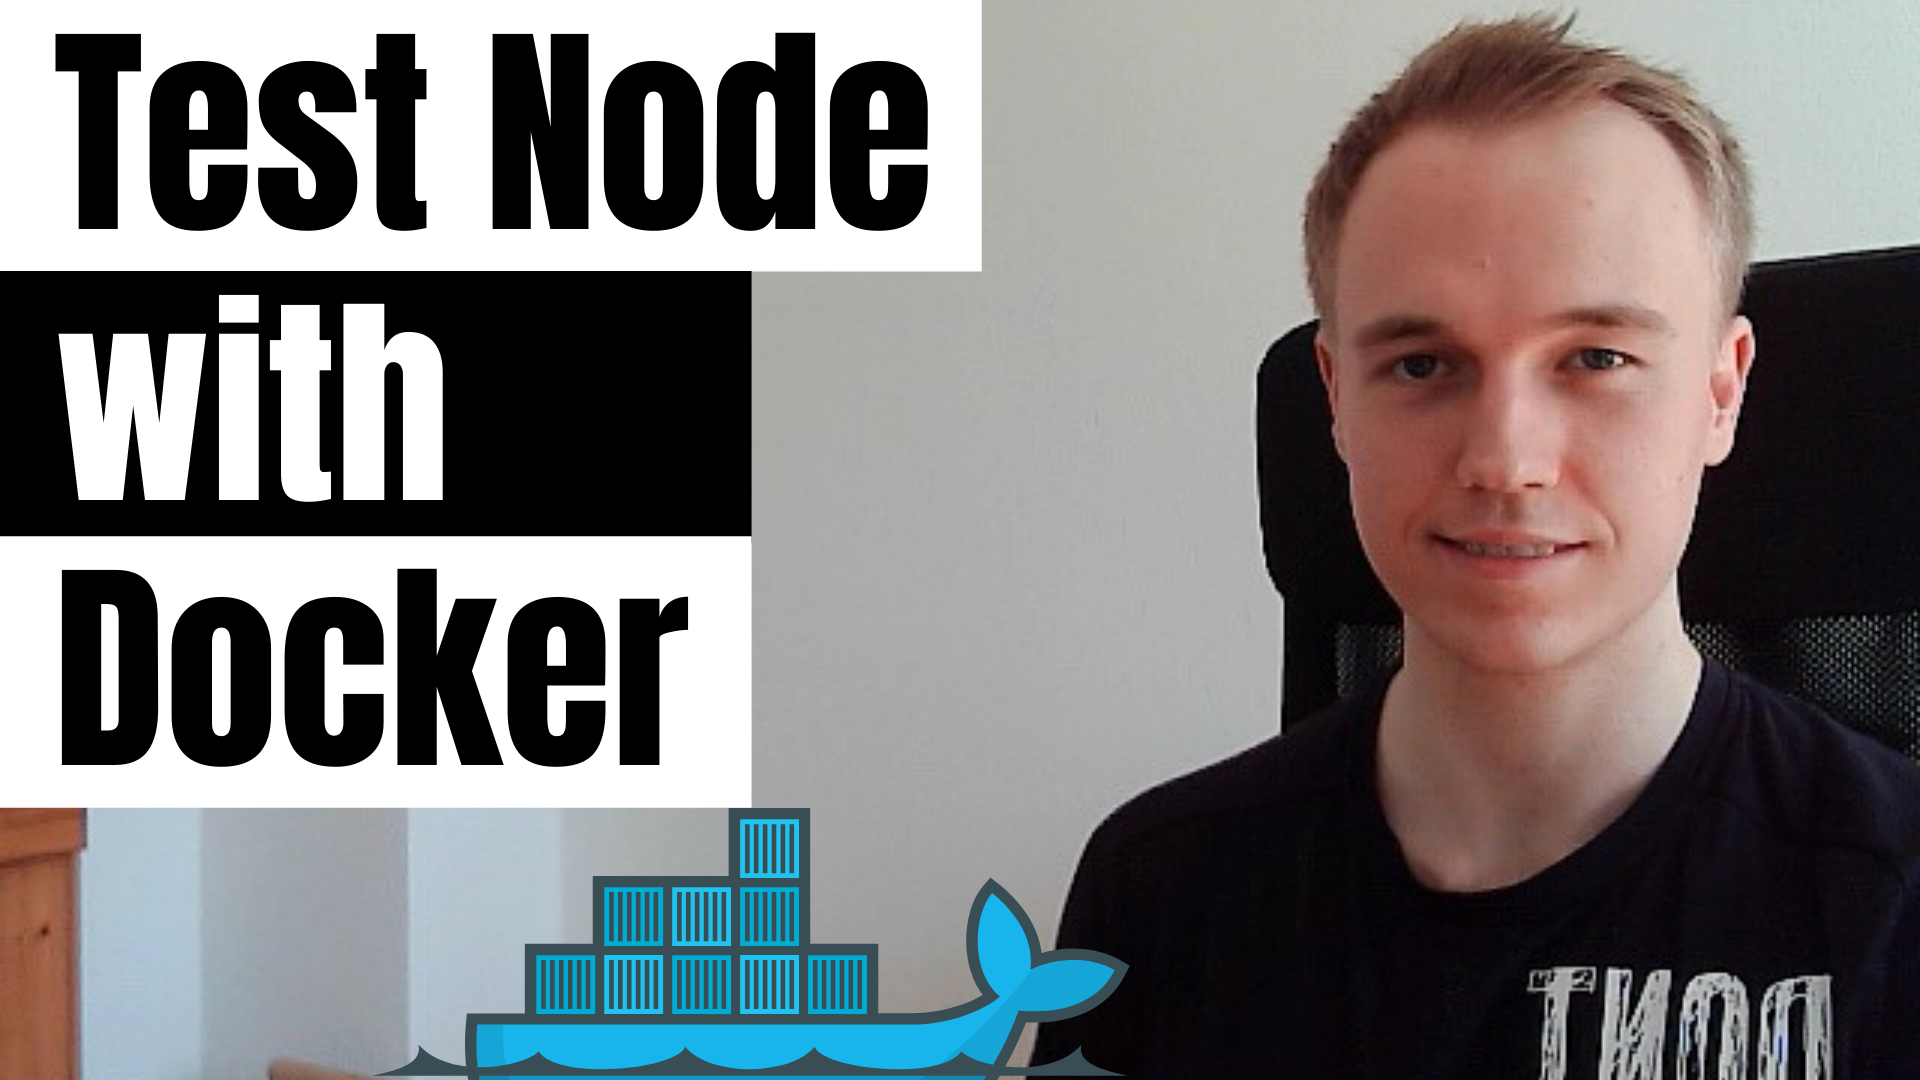 Test Node with Docker